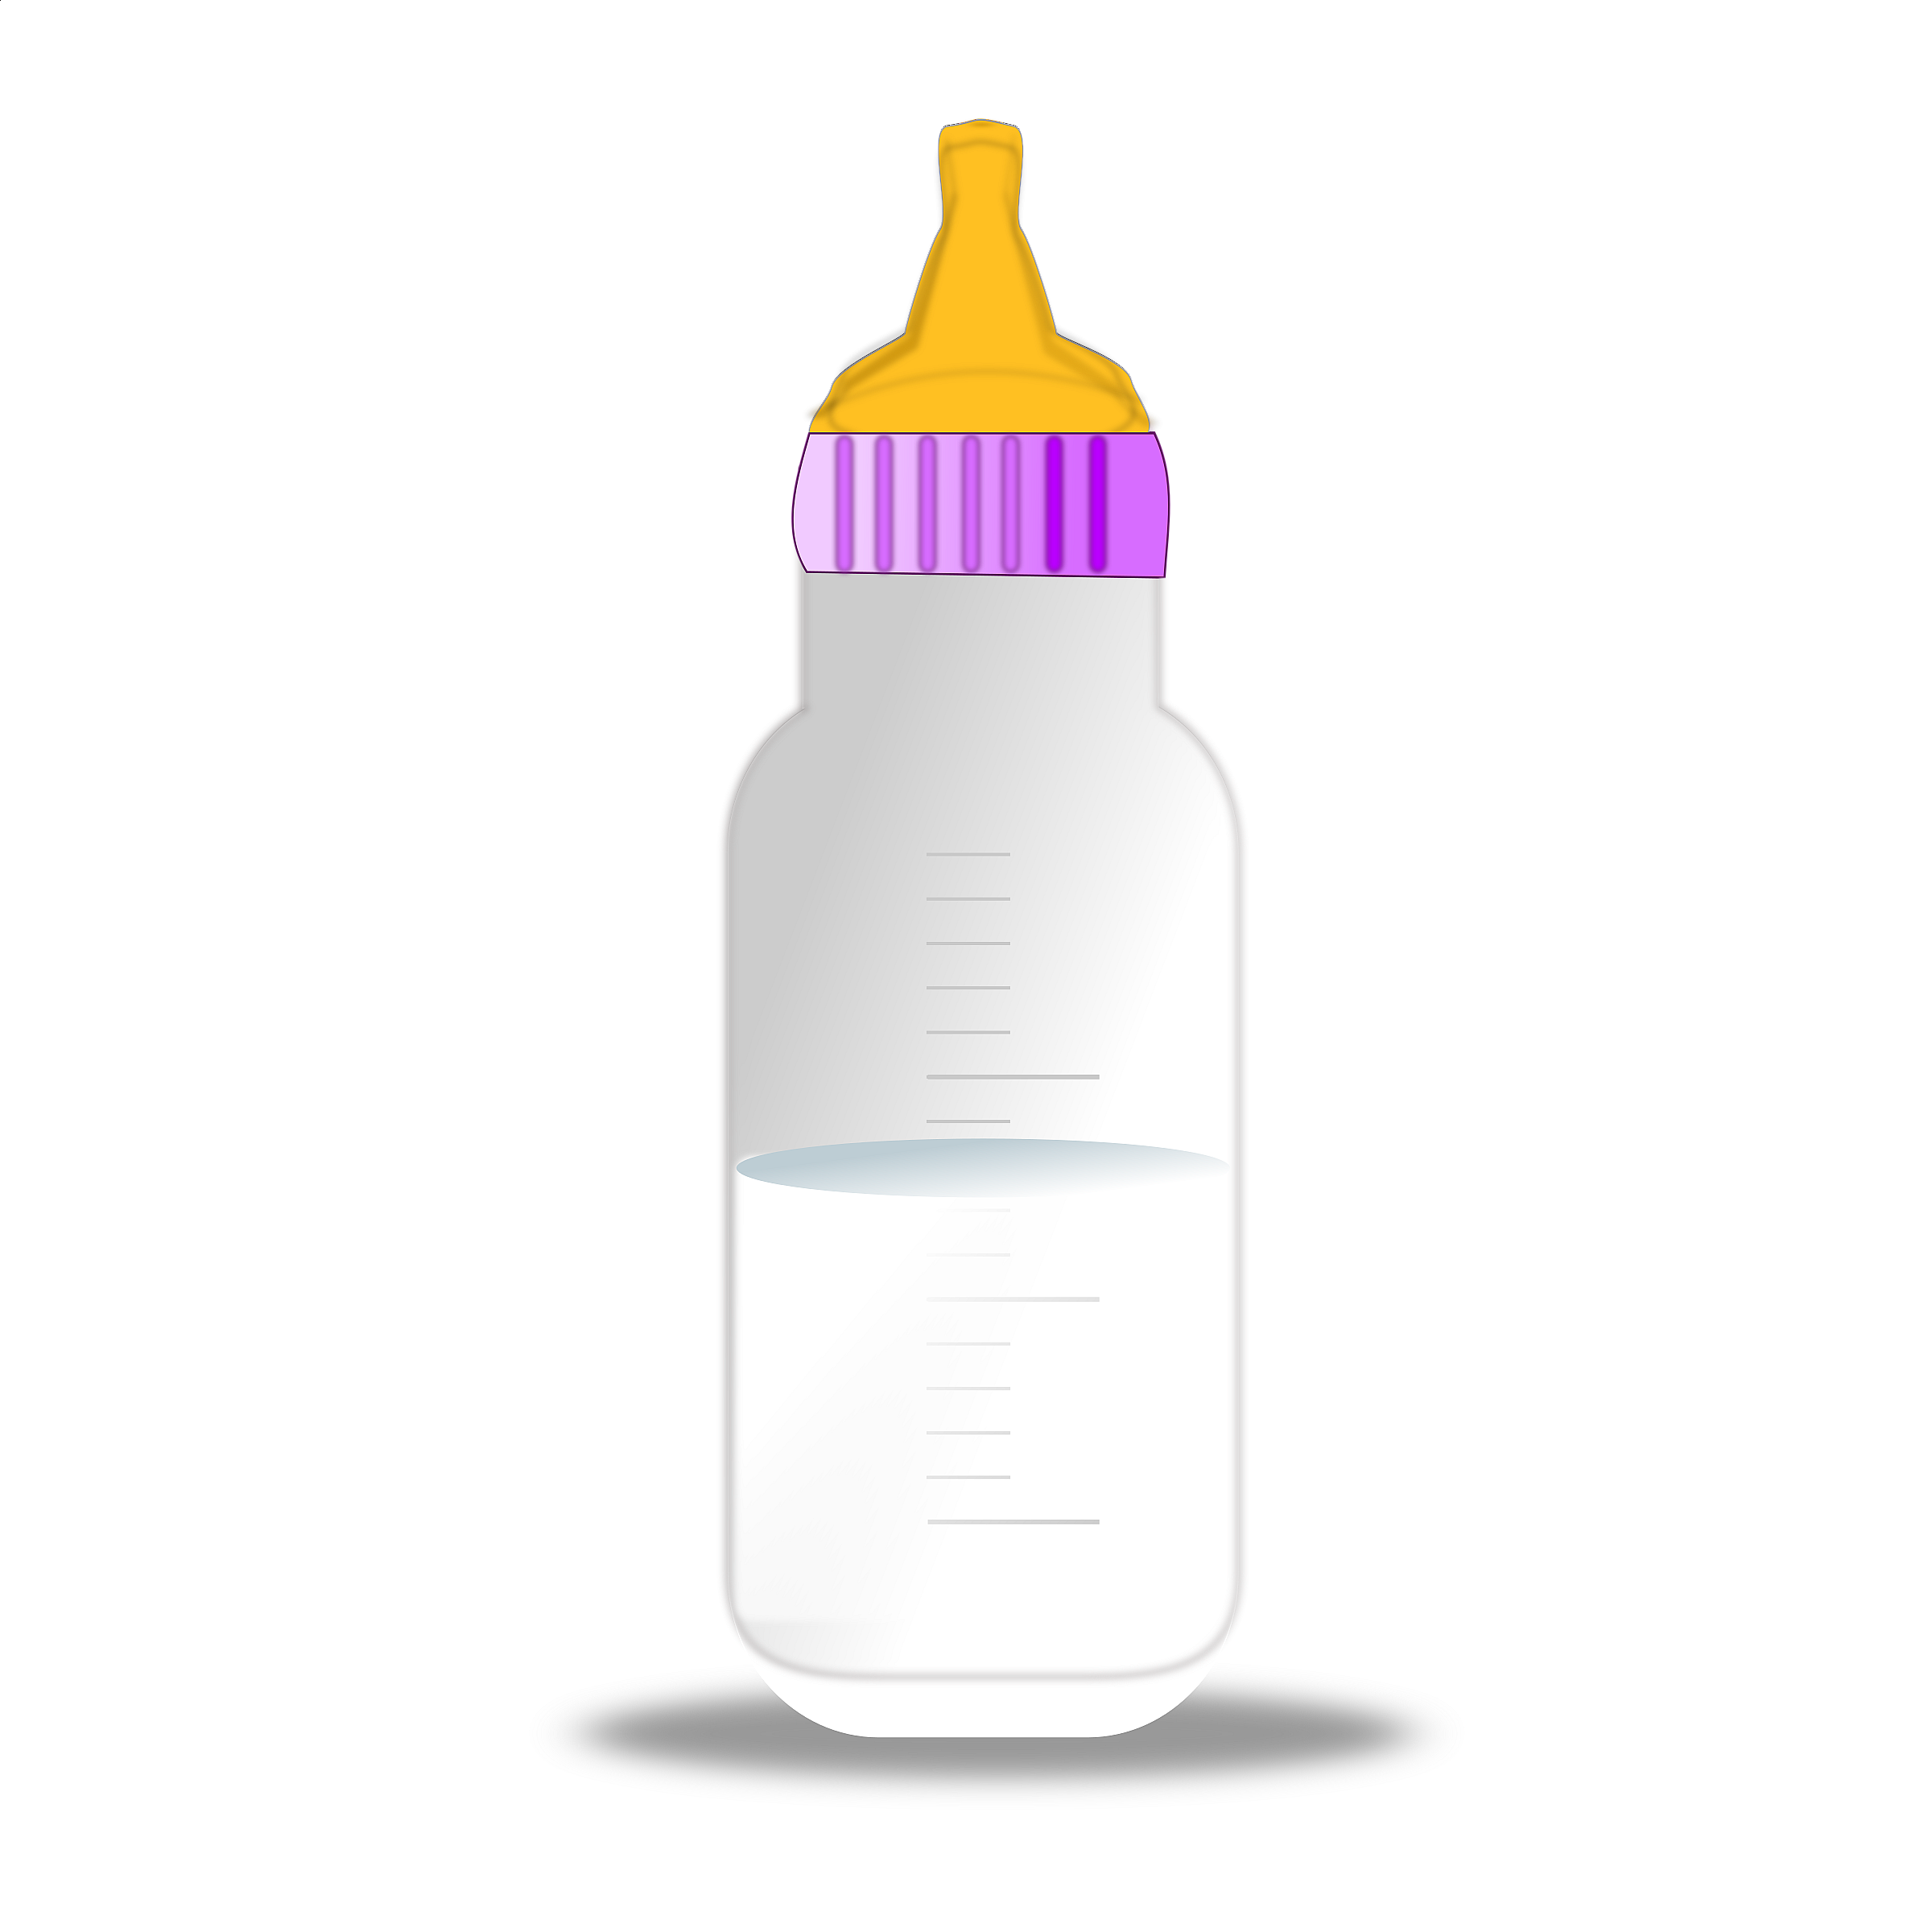 Baby www imgkid com. Milk bottle png